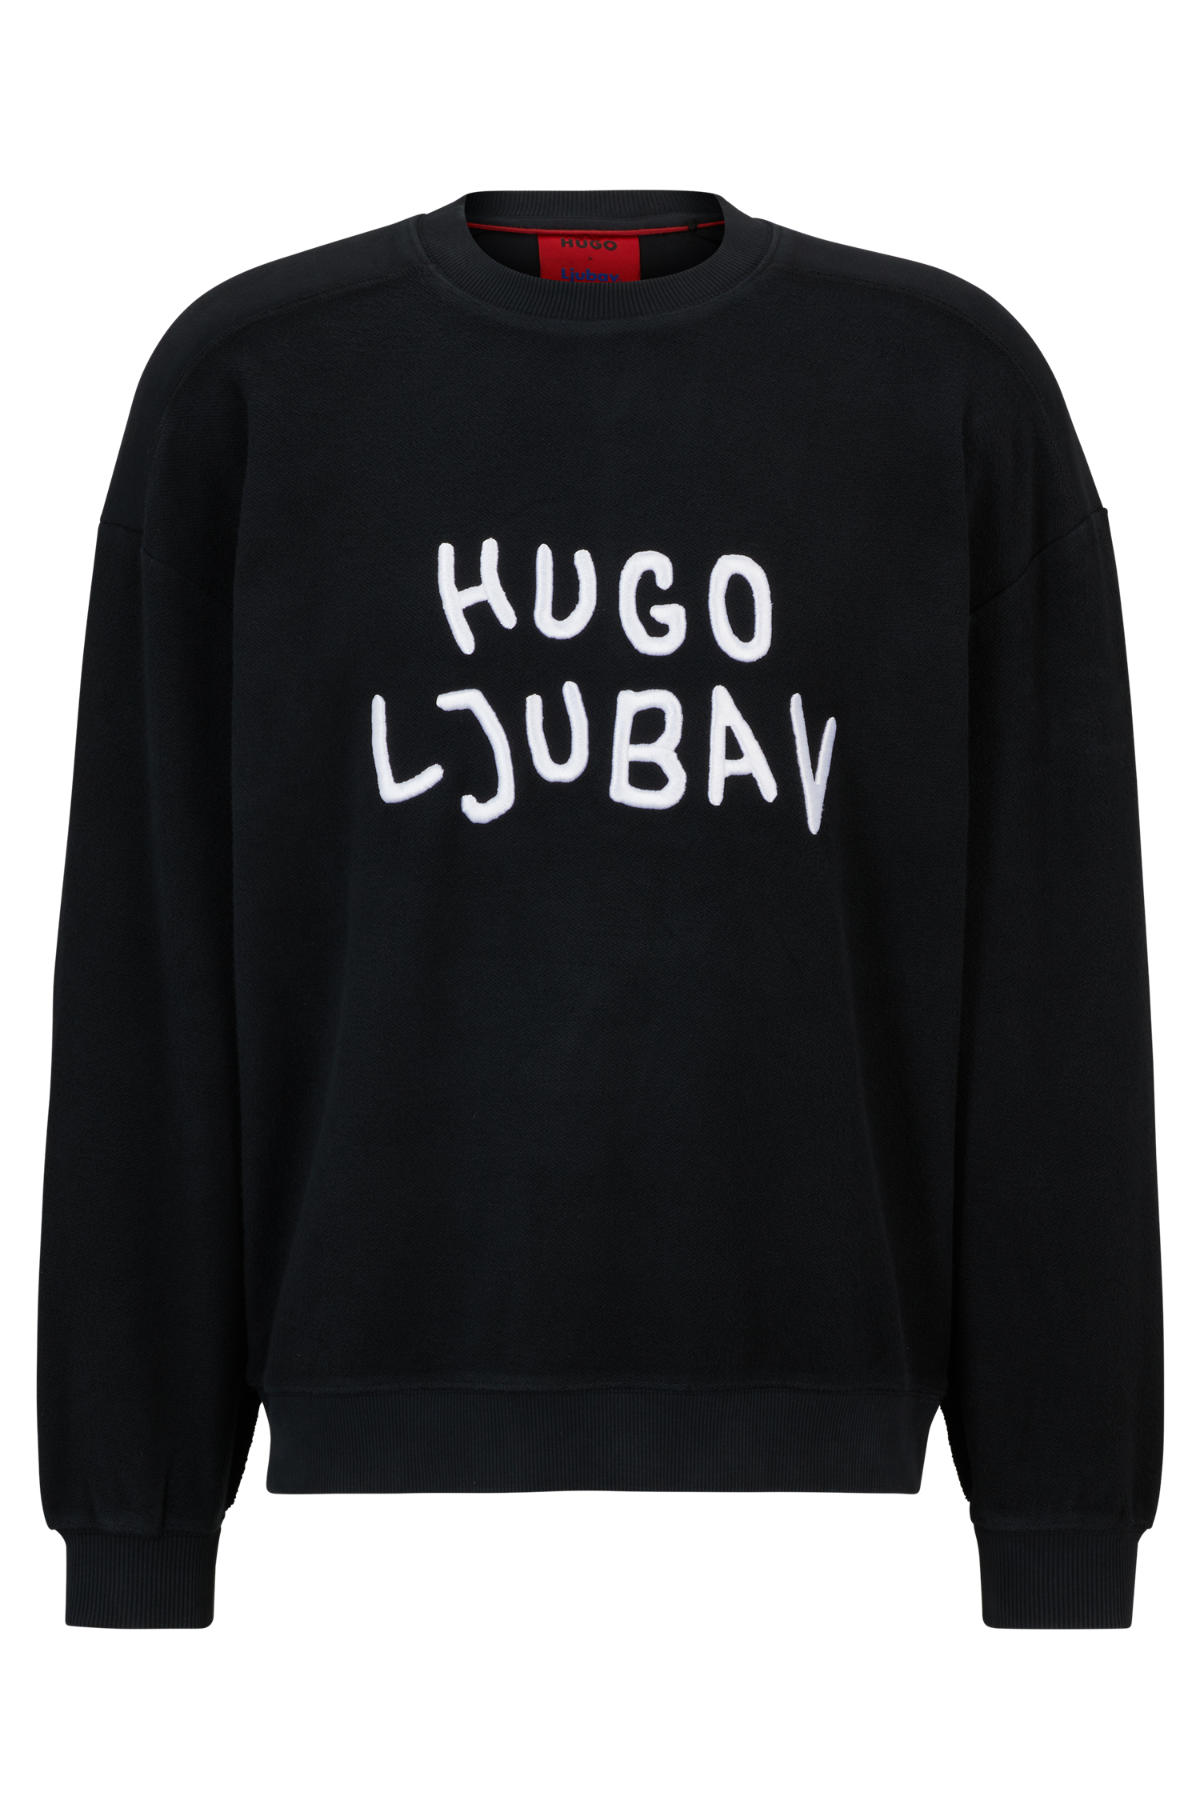 Hugo X Ljubav Fall/Winter 2023 Streetwear Collaboration Presented By Breuninger